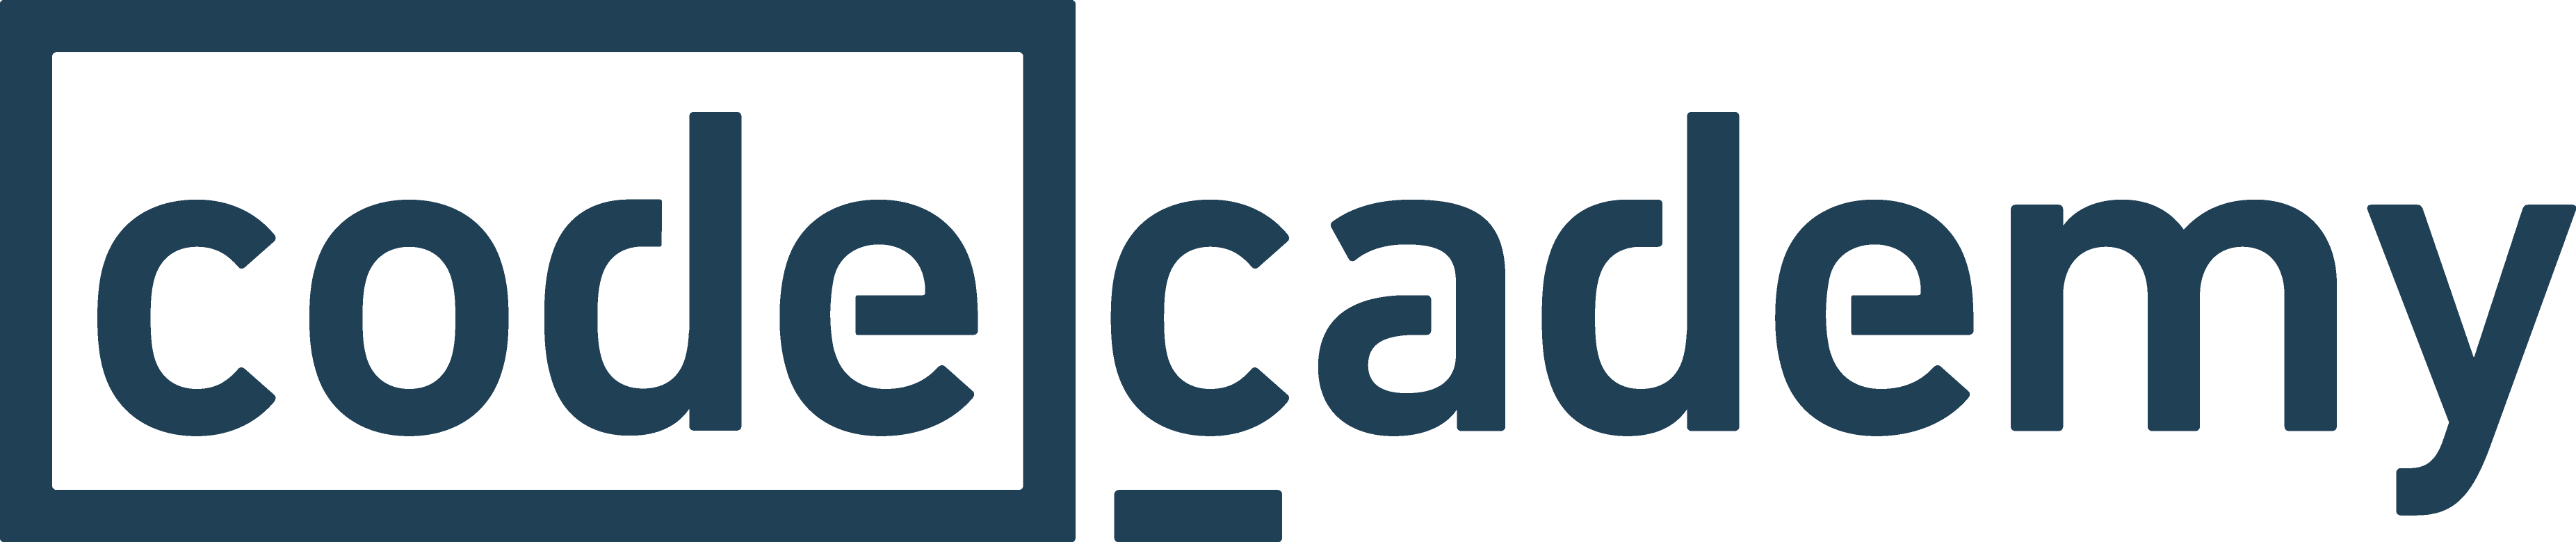 codecademy Logo photo - 1